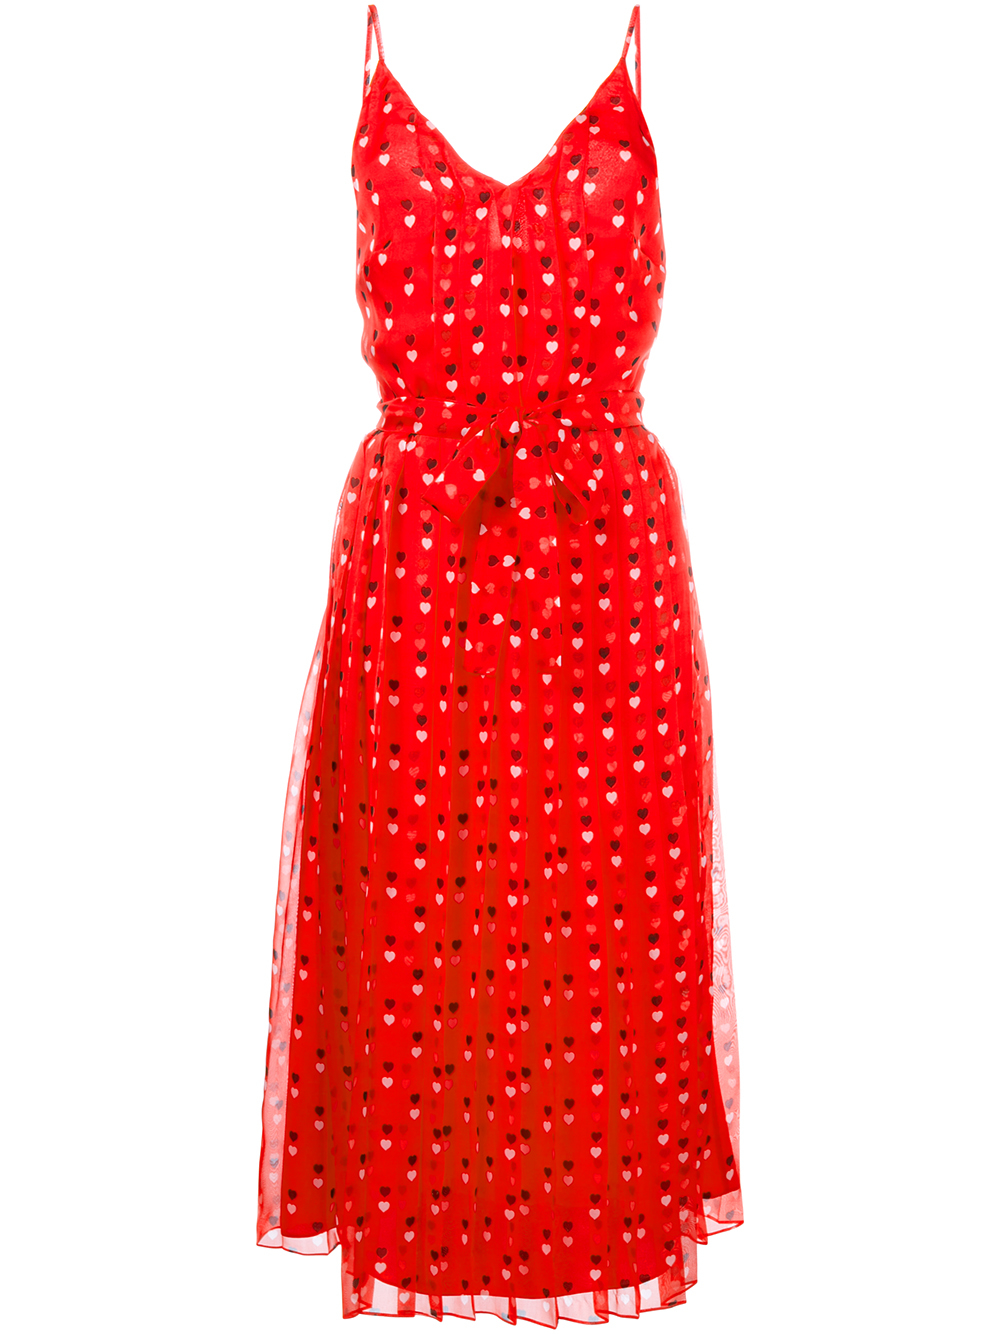 Lyst - Christopher Kane Heart Print Chiffon Dress in Red